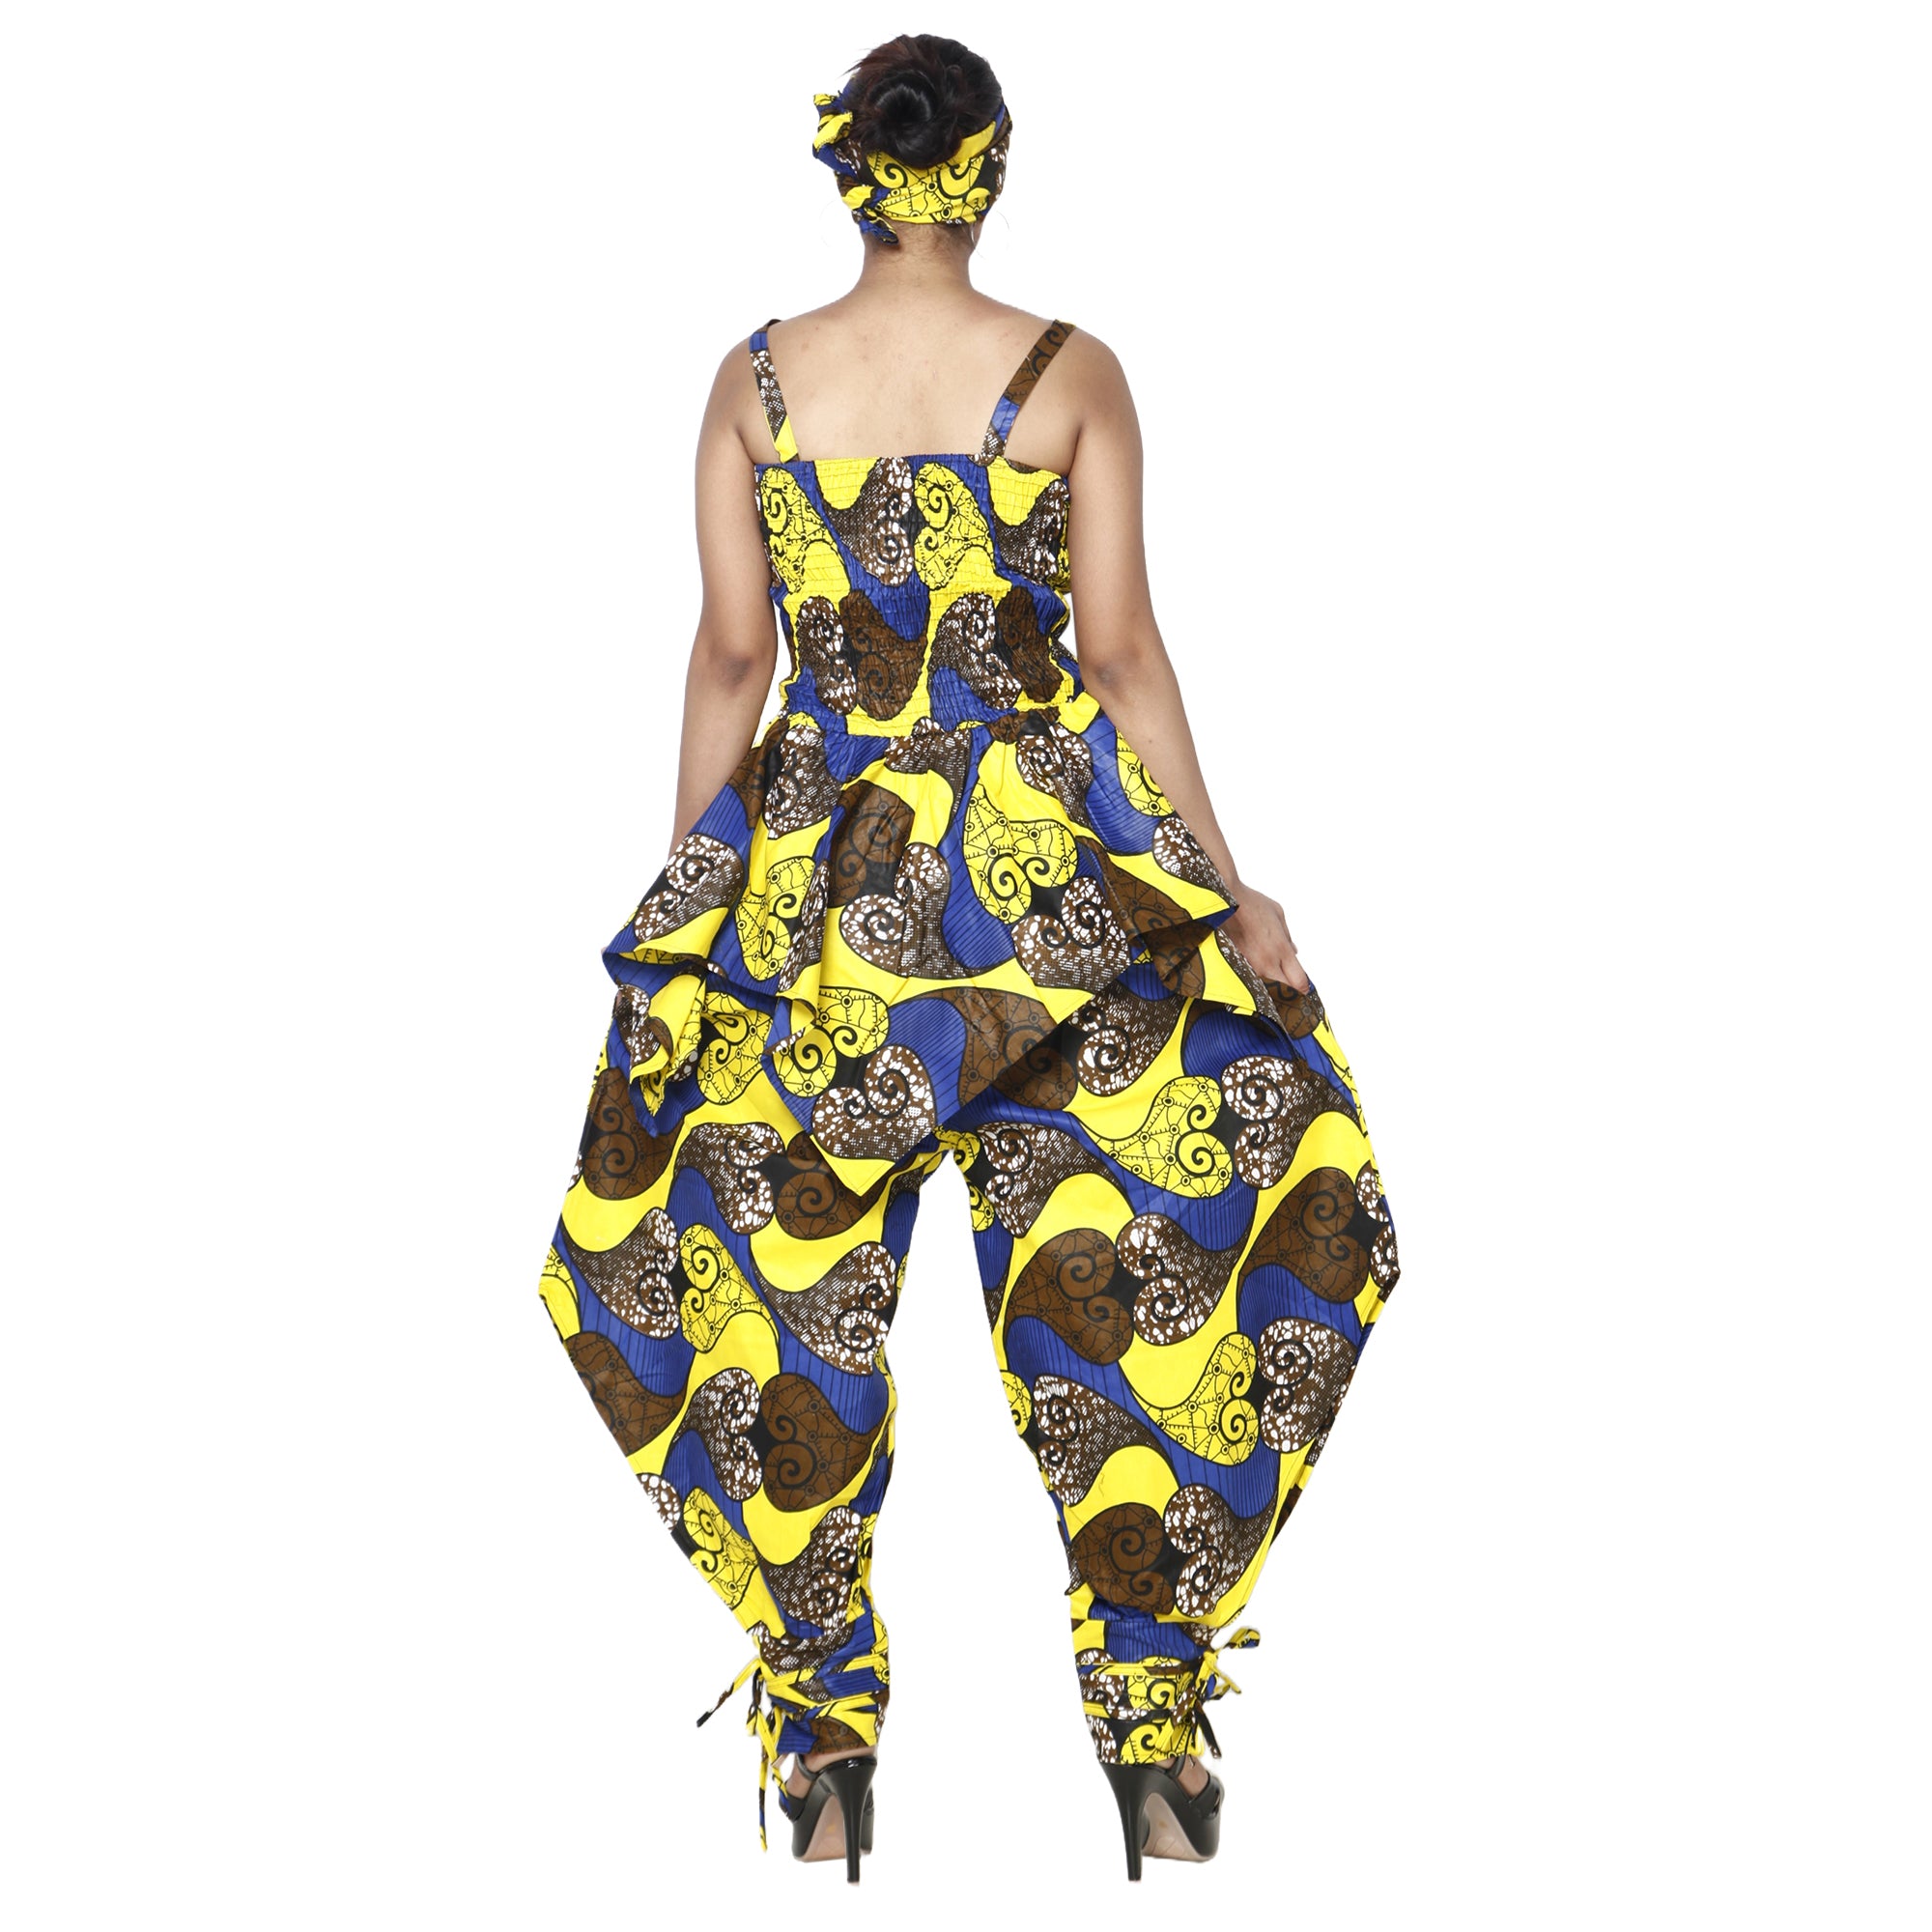 Women's African Print Sleeveless Peplum Top and Jogger Pants Set -- FI-4042